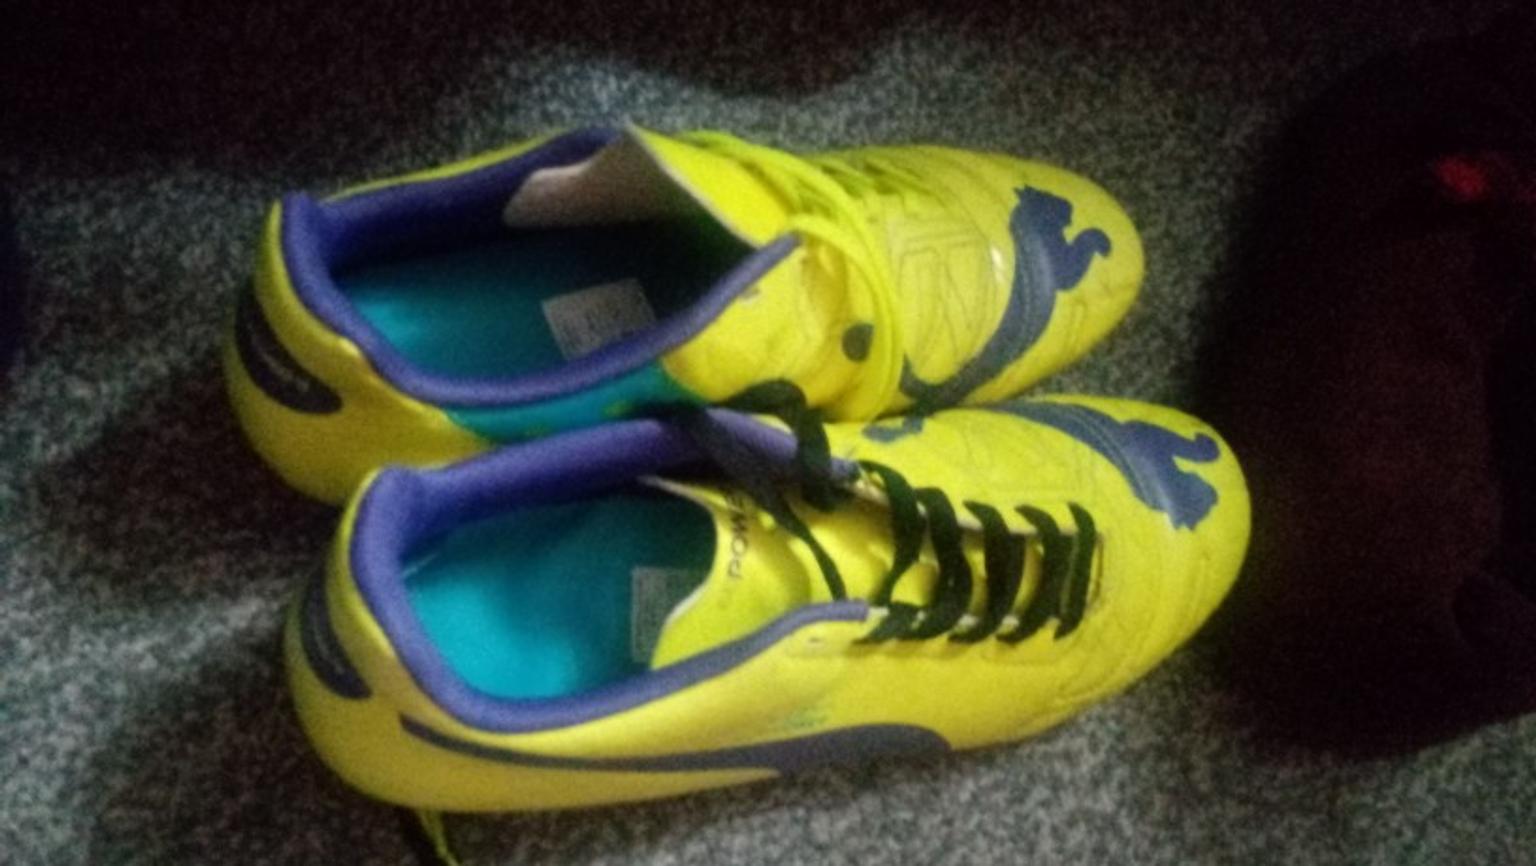 puma football shoes for sale